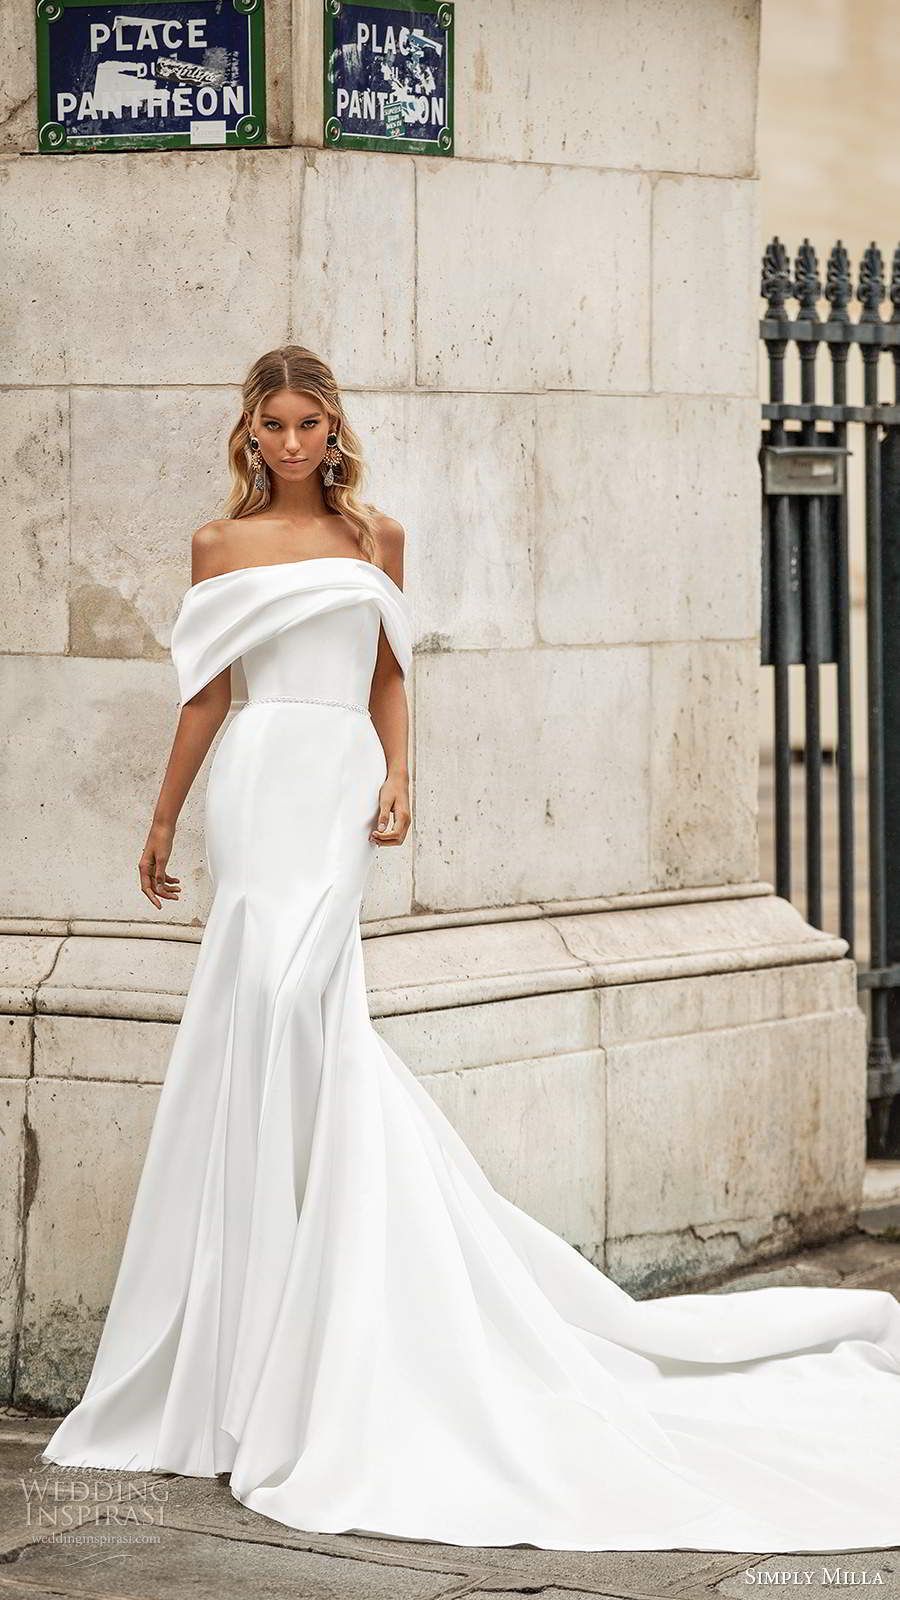 Milla Nova's Simply Milla 2020 Wedding Dresses | Wedding Inspirasi -   19 dress Wedding casamento ideas